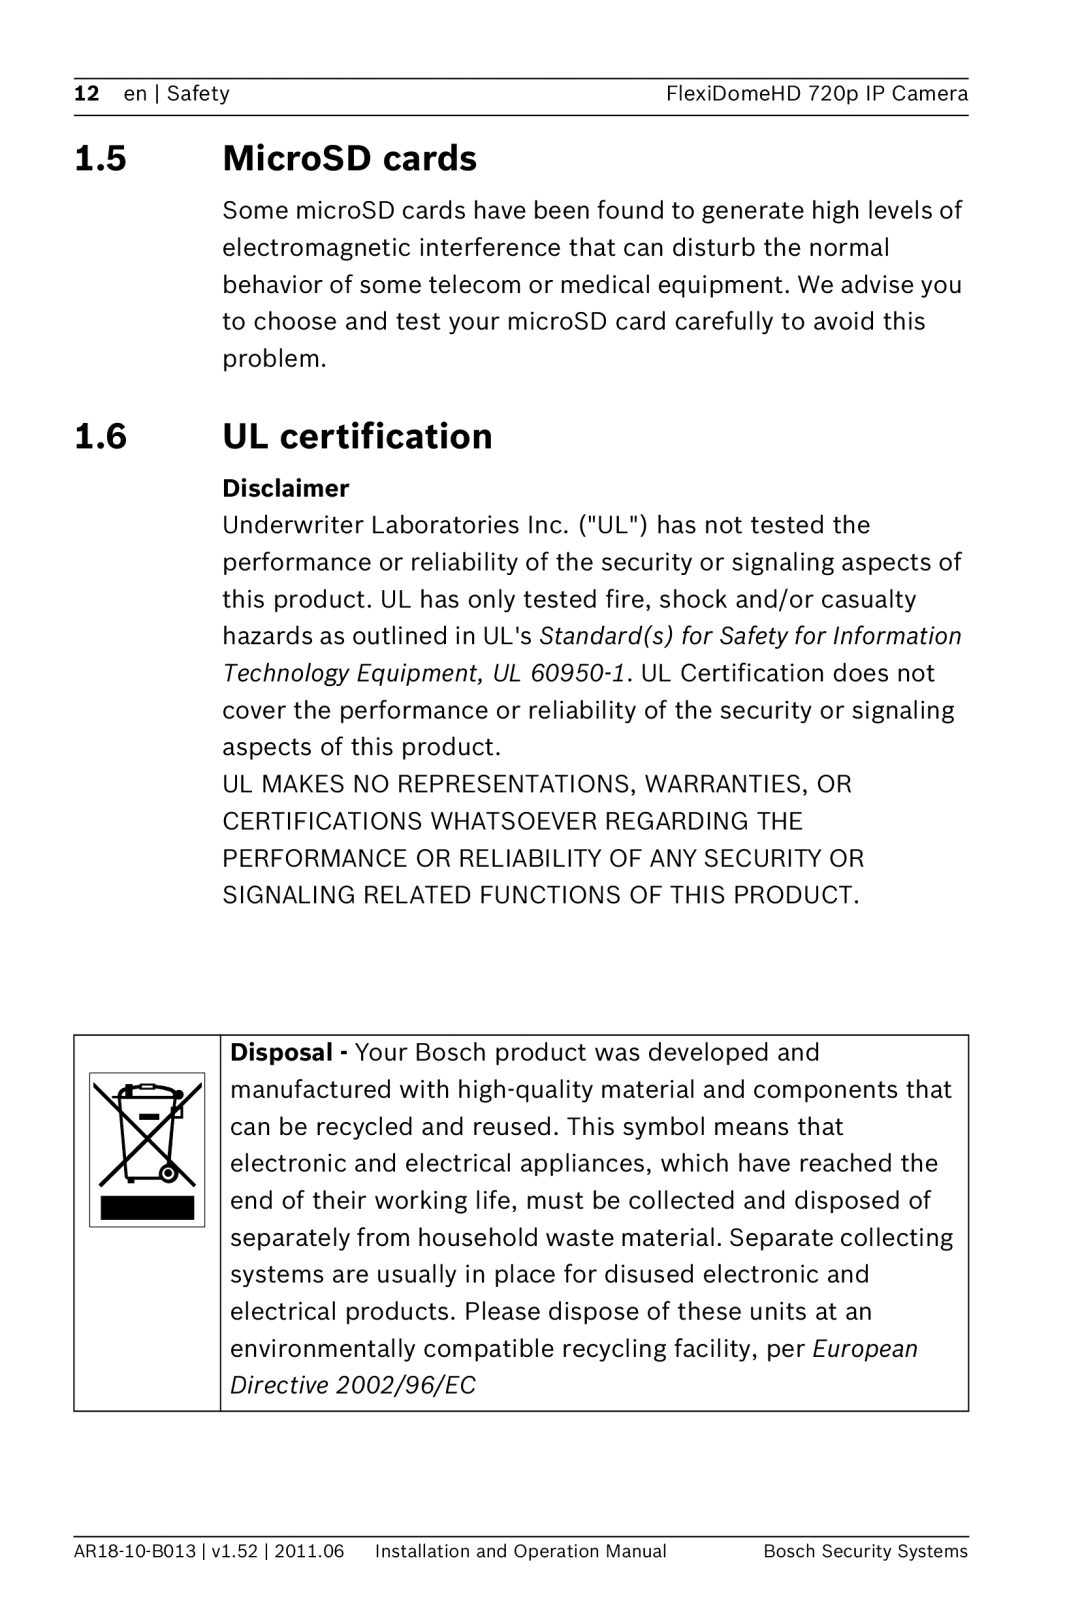 Bosch Appliances NDN-921 operation manual 1.5MicroSD cards, 1.6UL certification, Disclaimer 